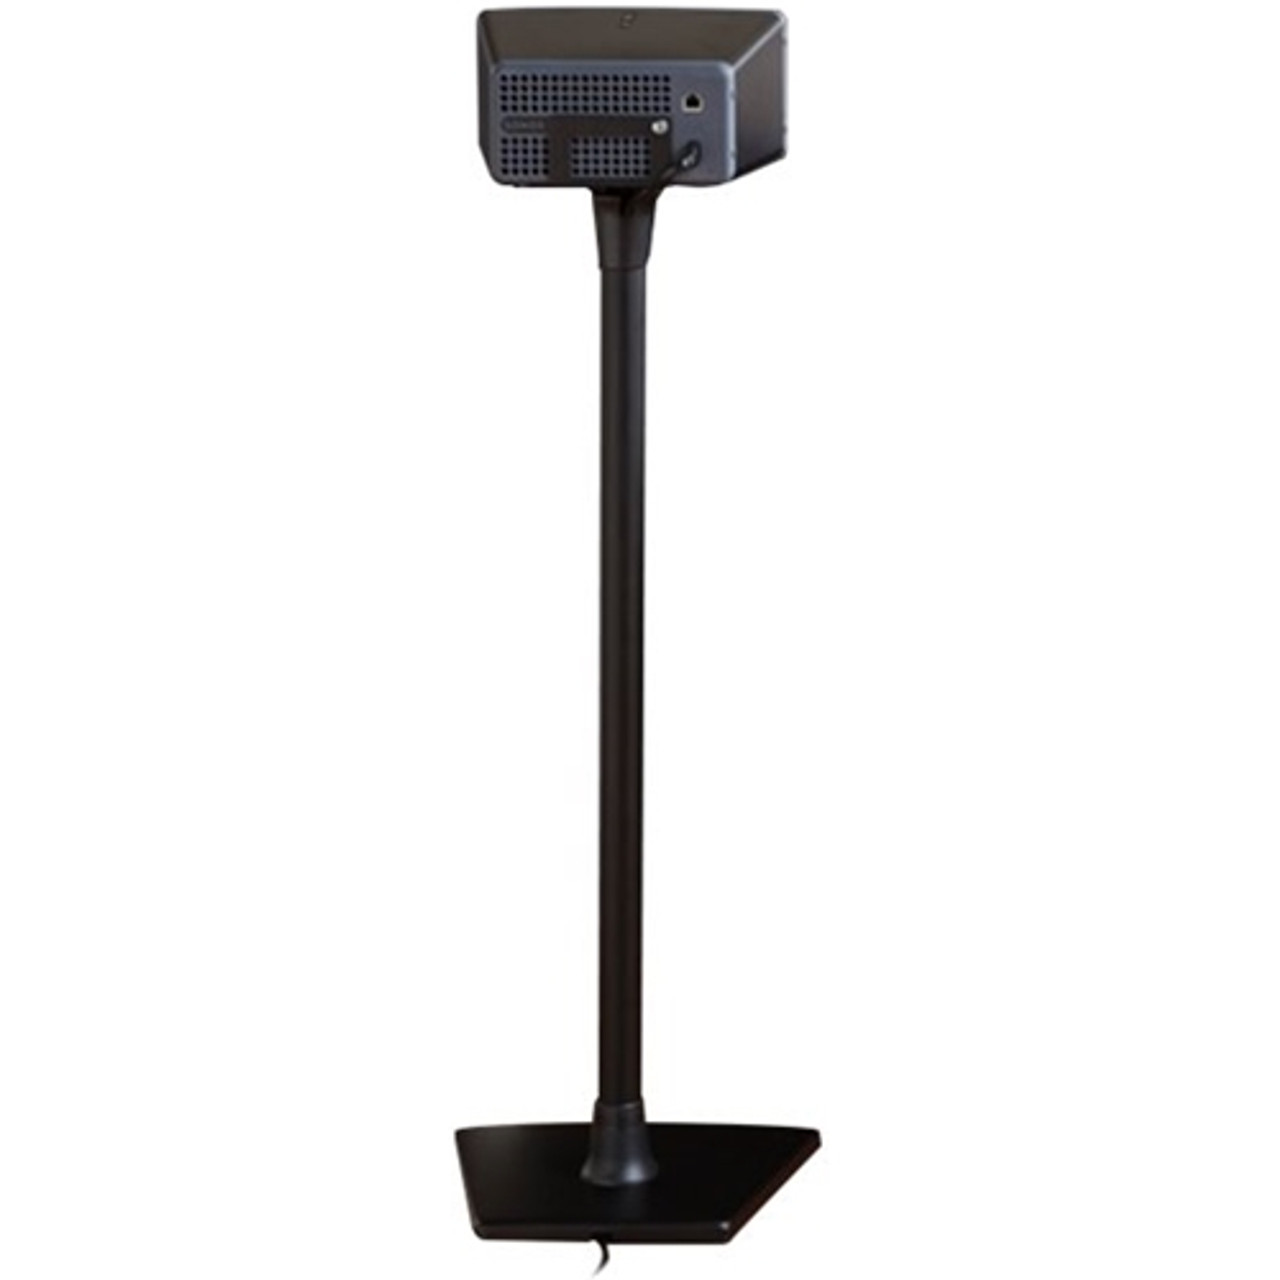 Sanus - Speaker Stand - Black